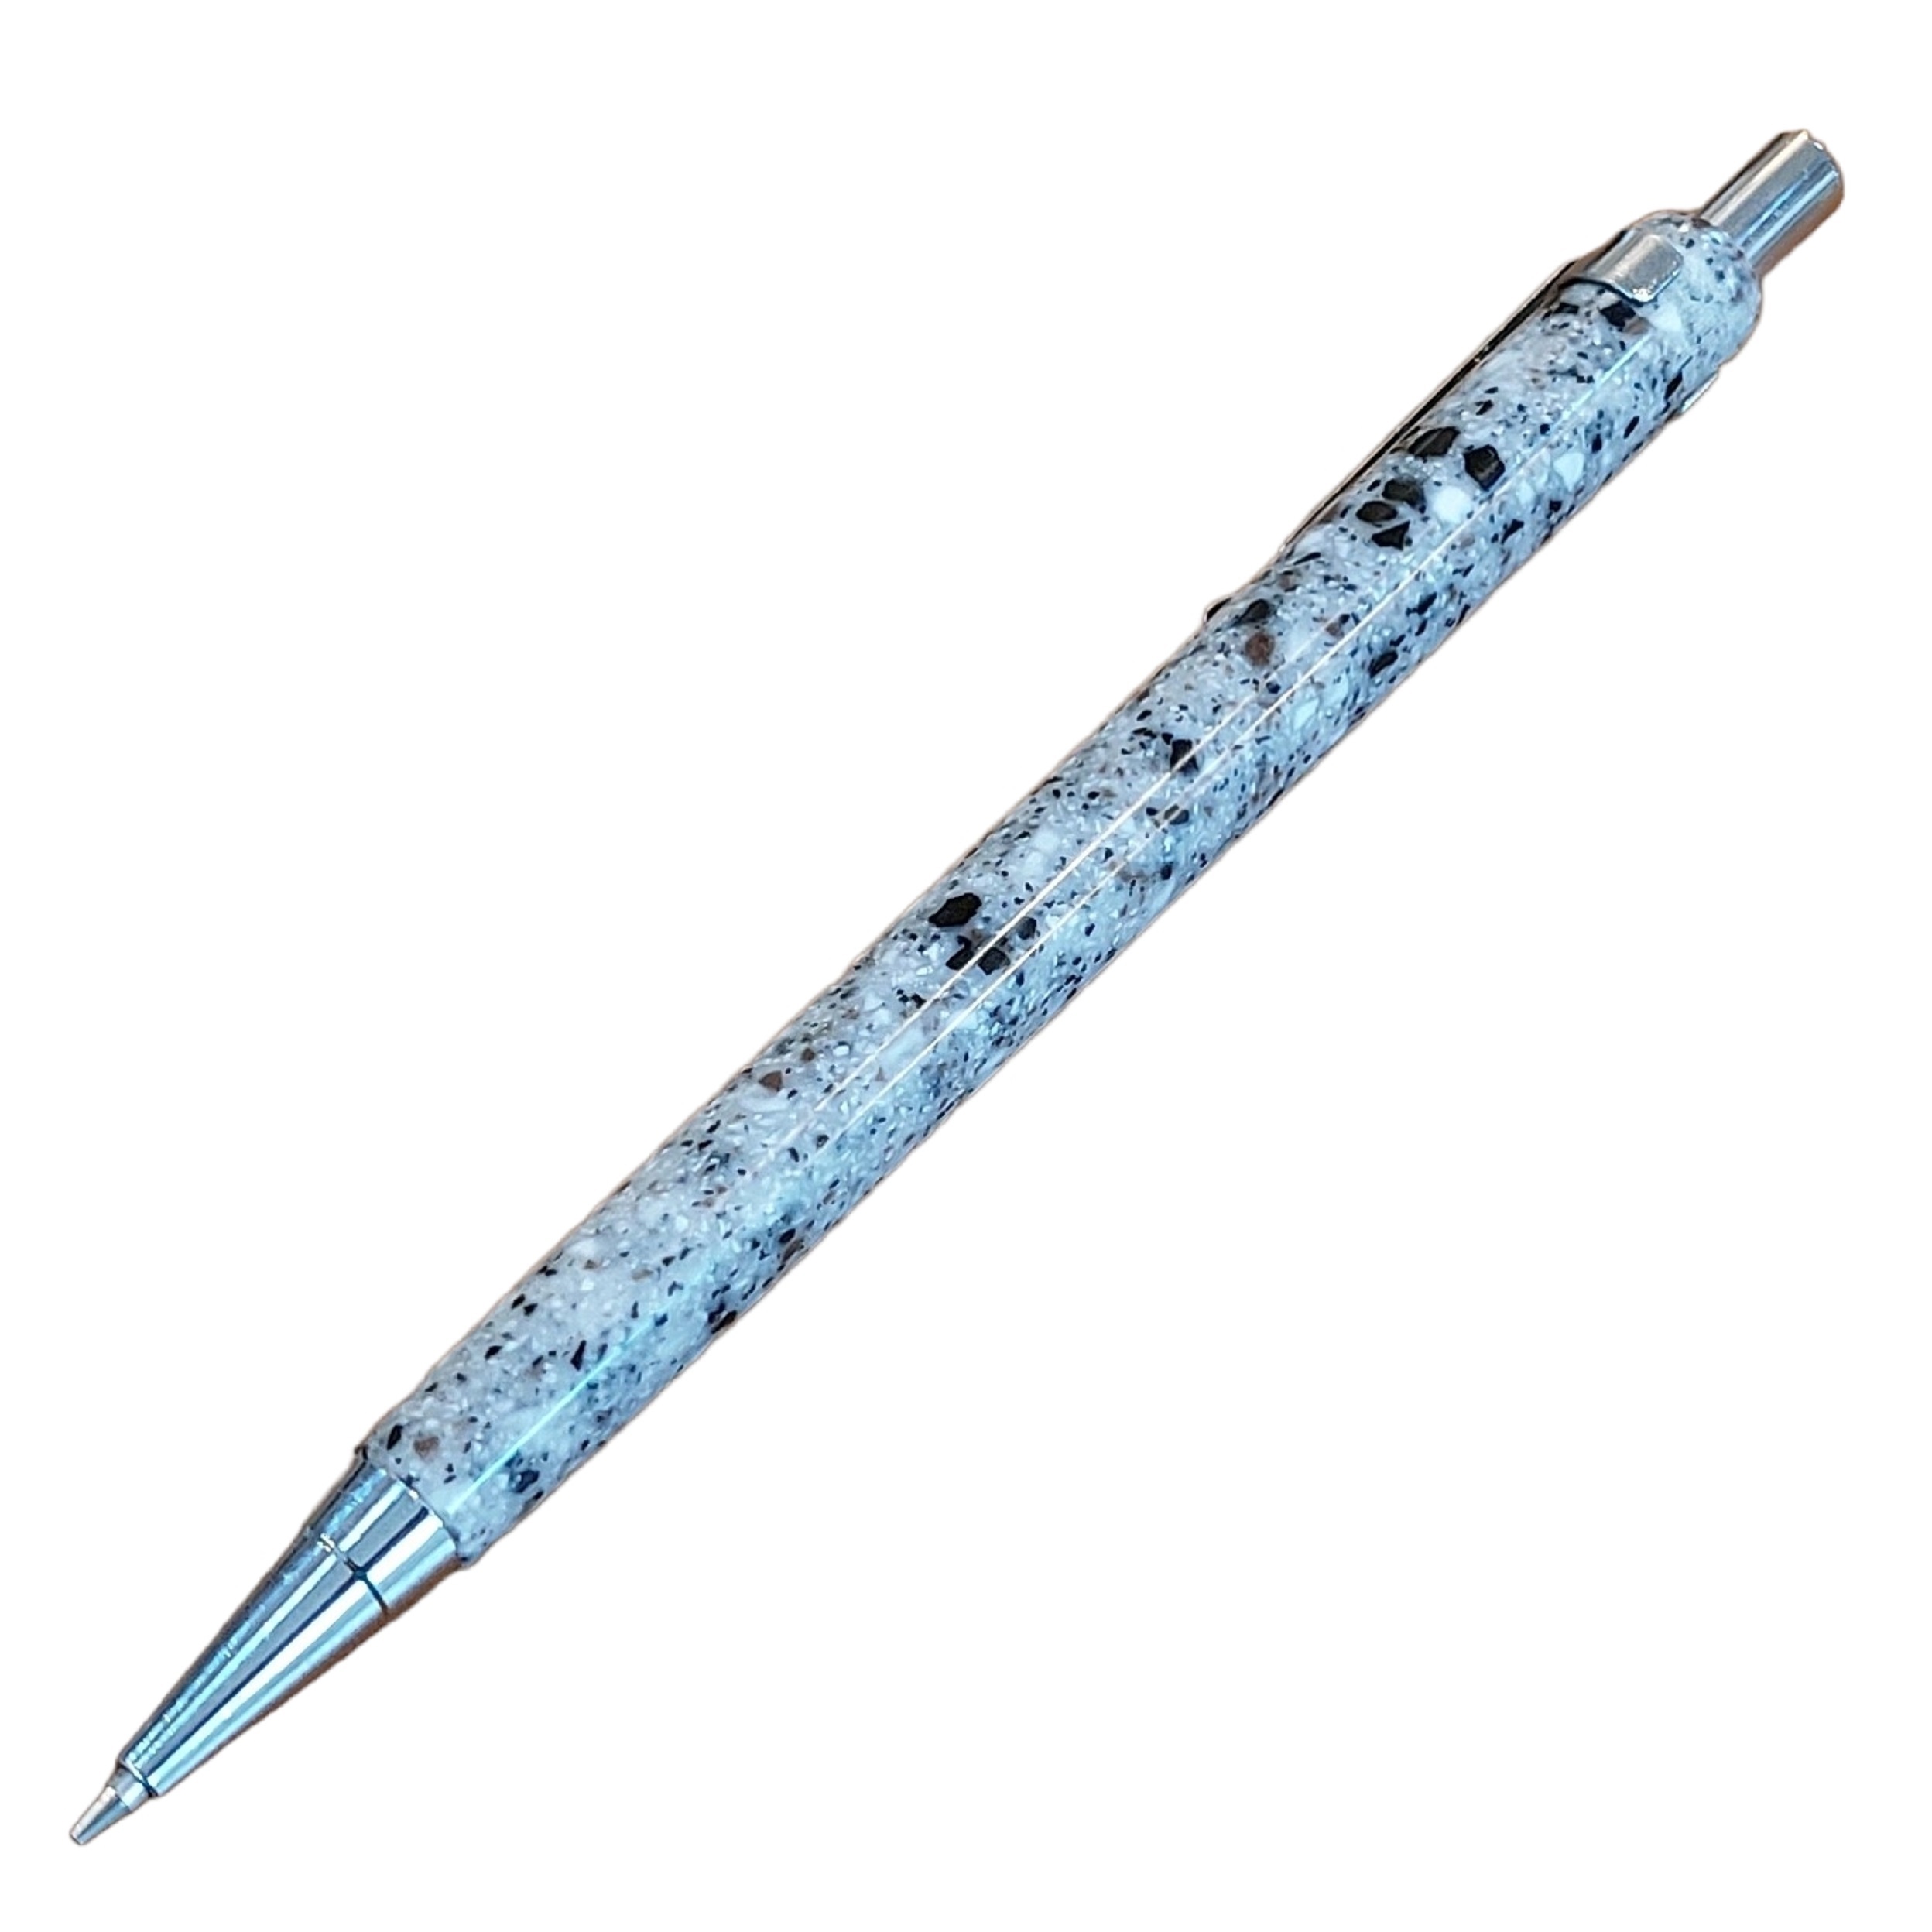 مداد نوکی 0.7 میلی متری مدل korin stone